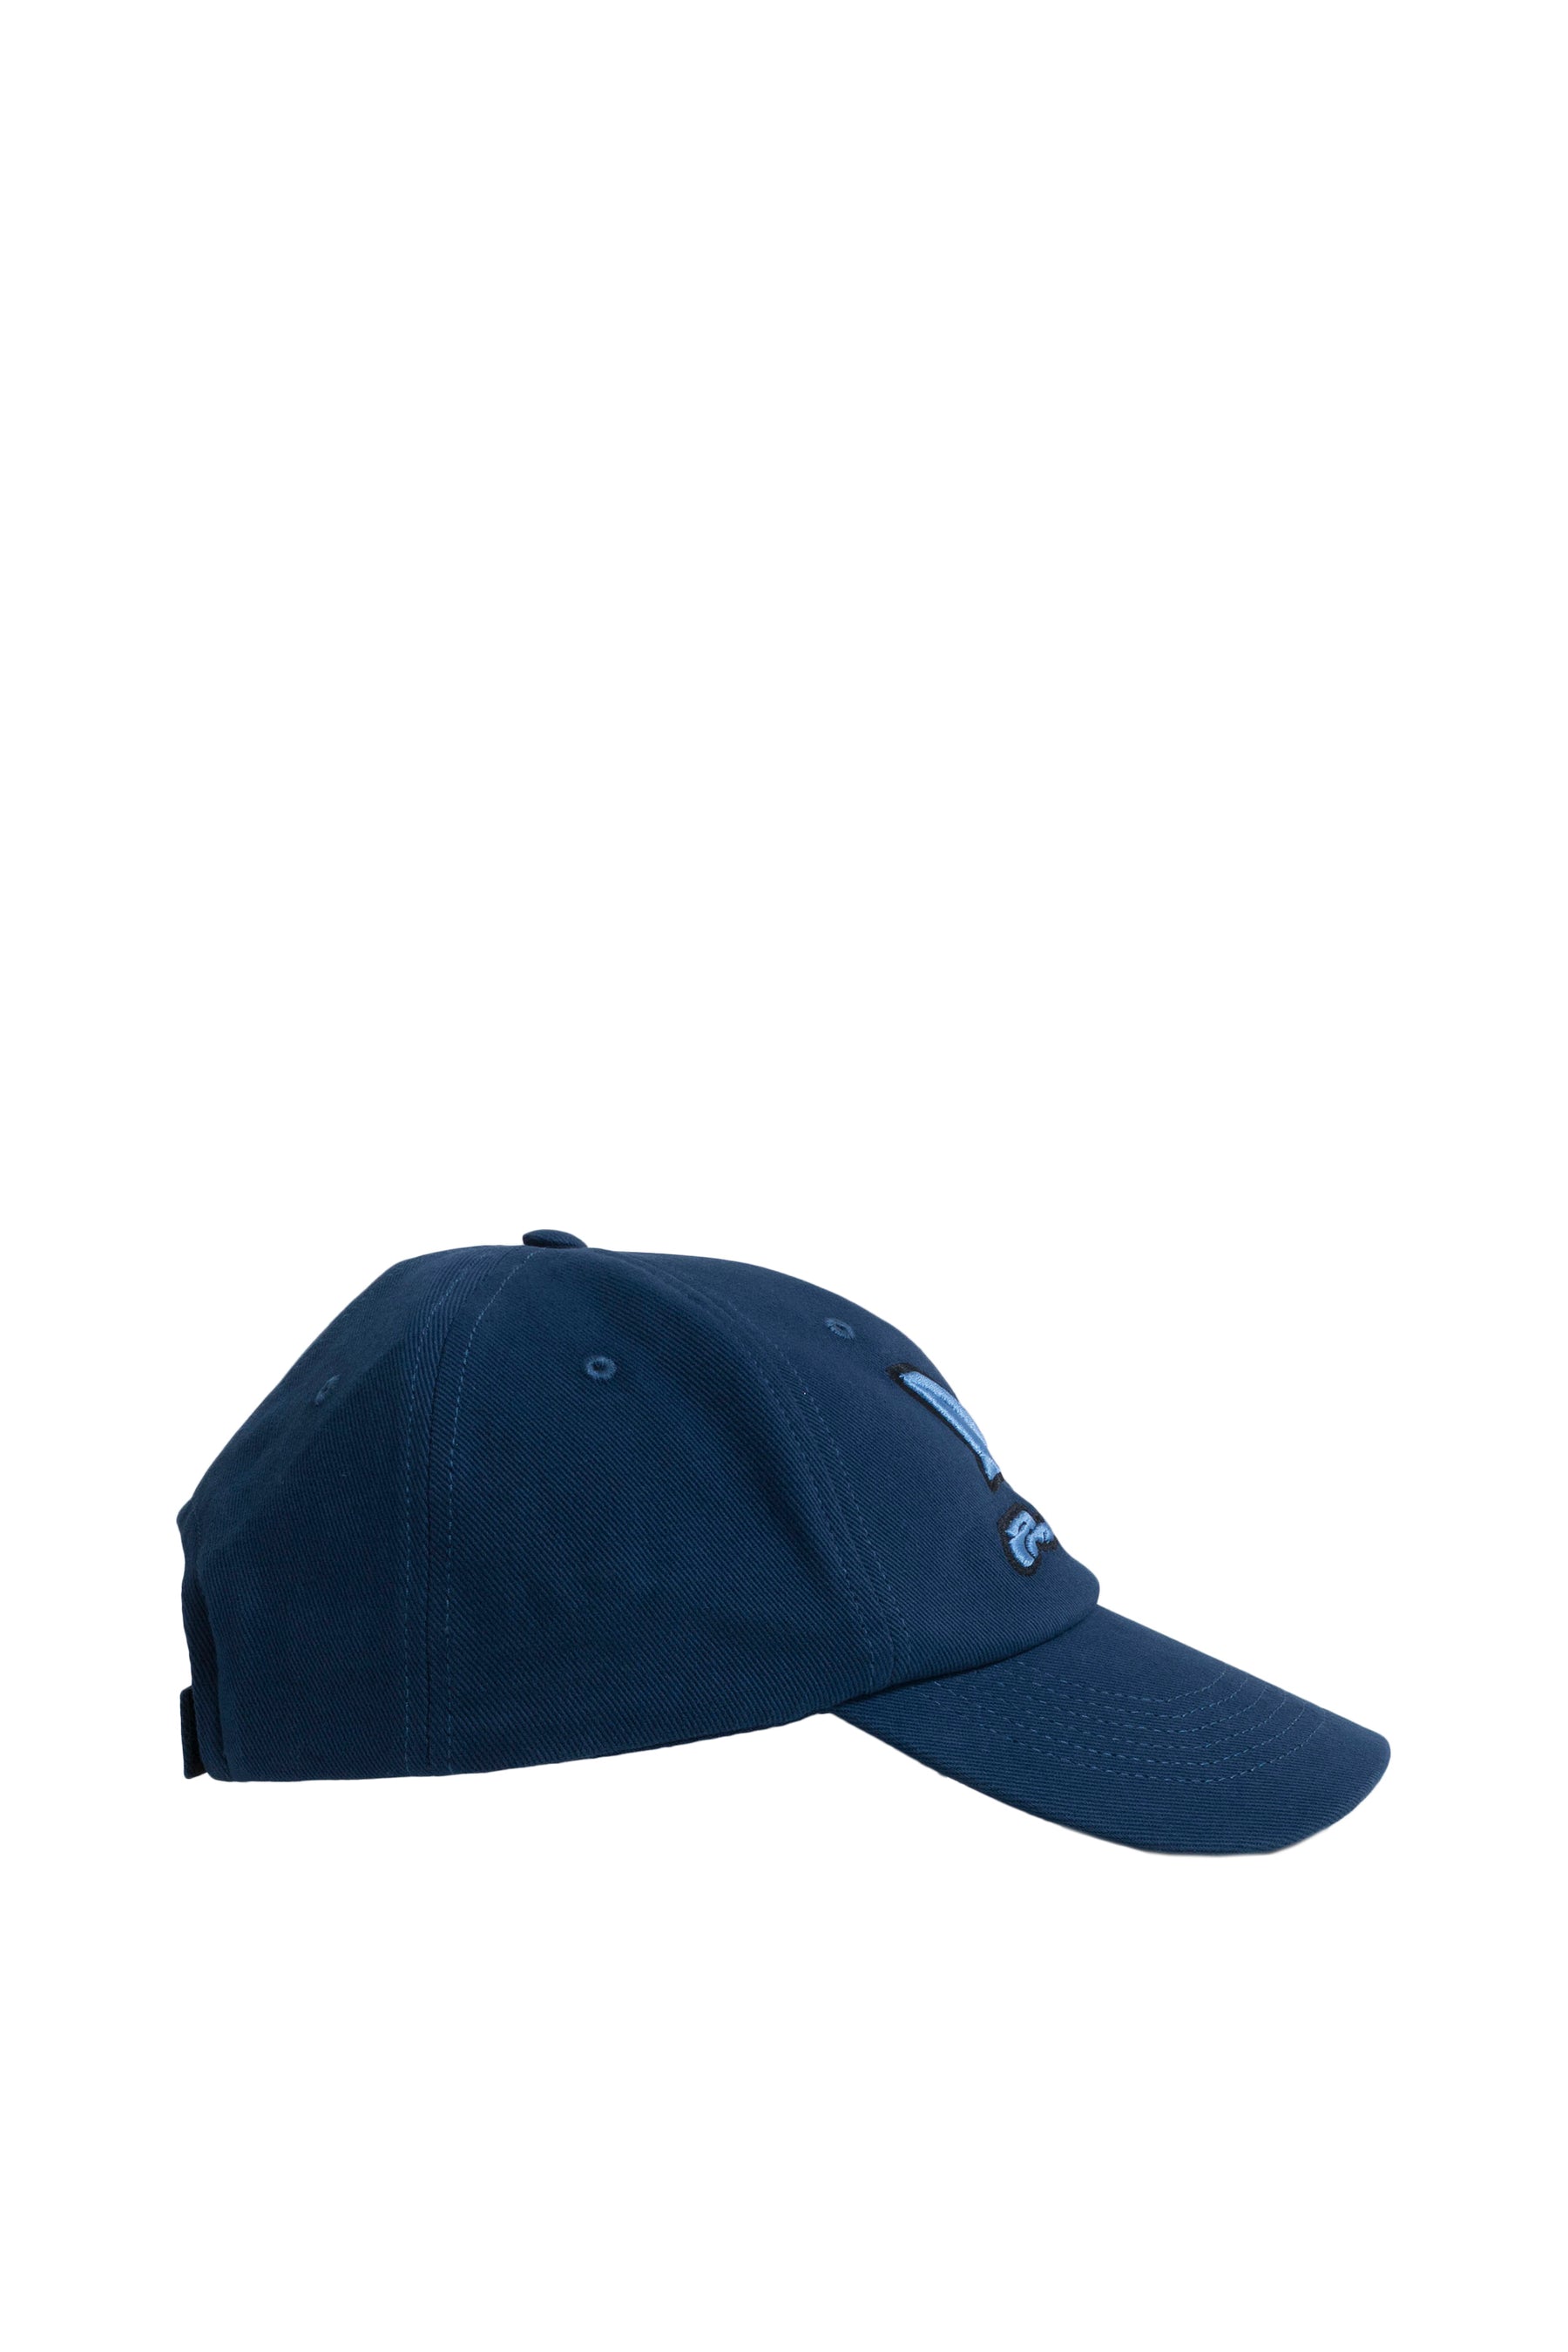 AMBUSH アンブッシュ SS23 LOGO BASEBALL CAP / INSIGNIA BLUE BONNIE